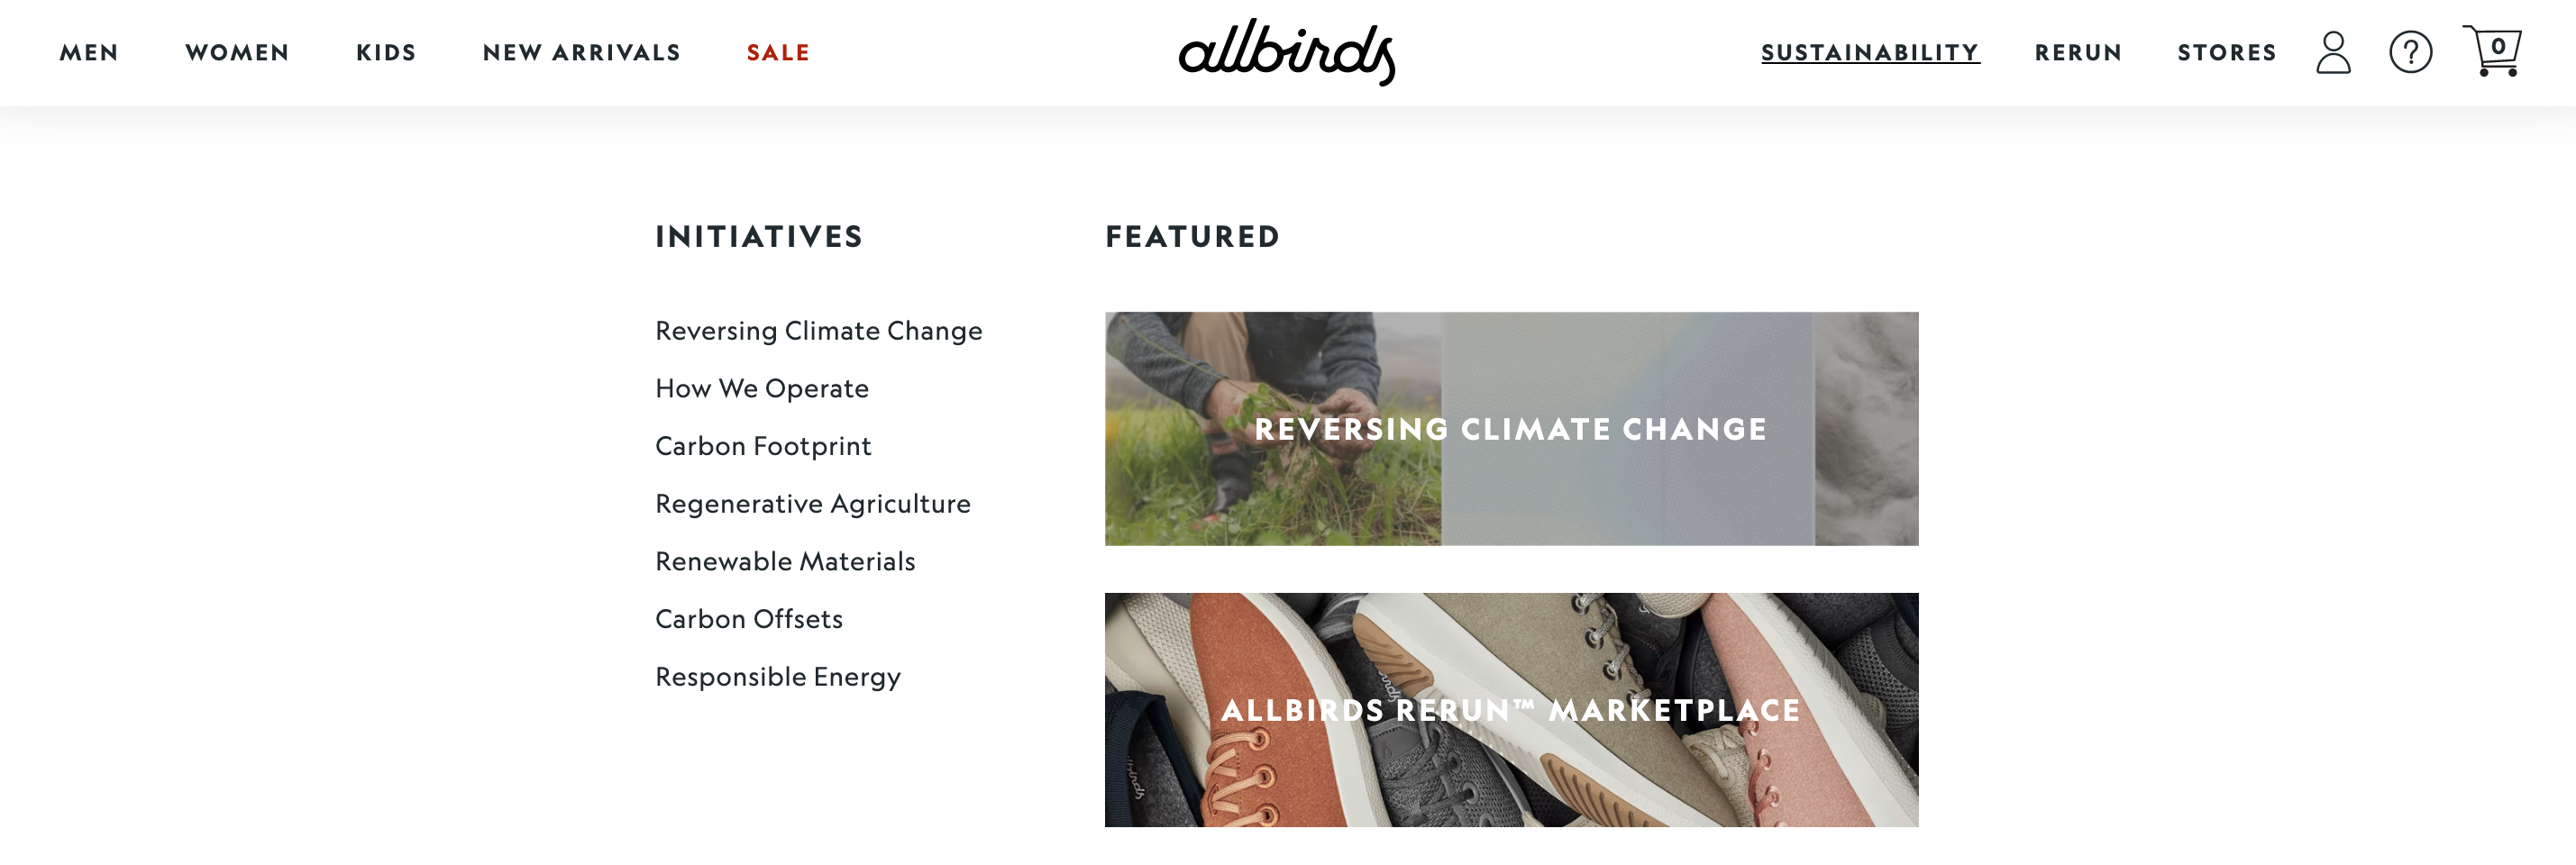 Albirds website sustainability menu